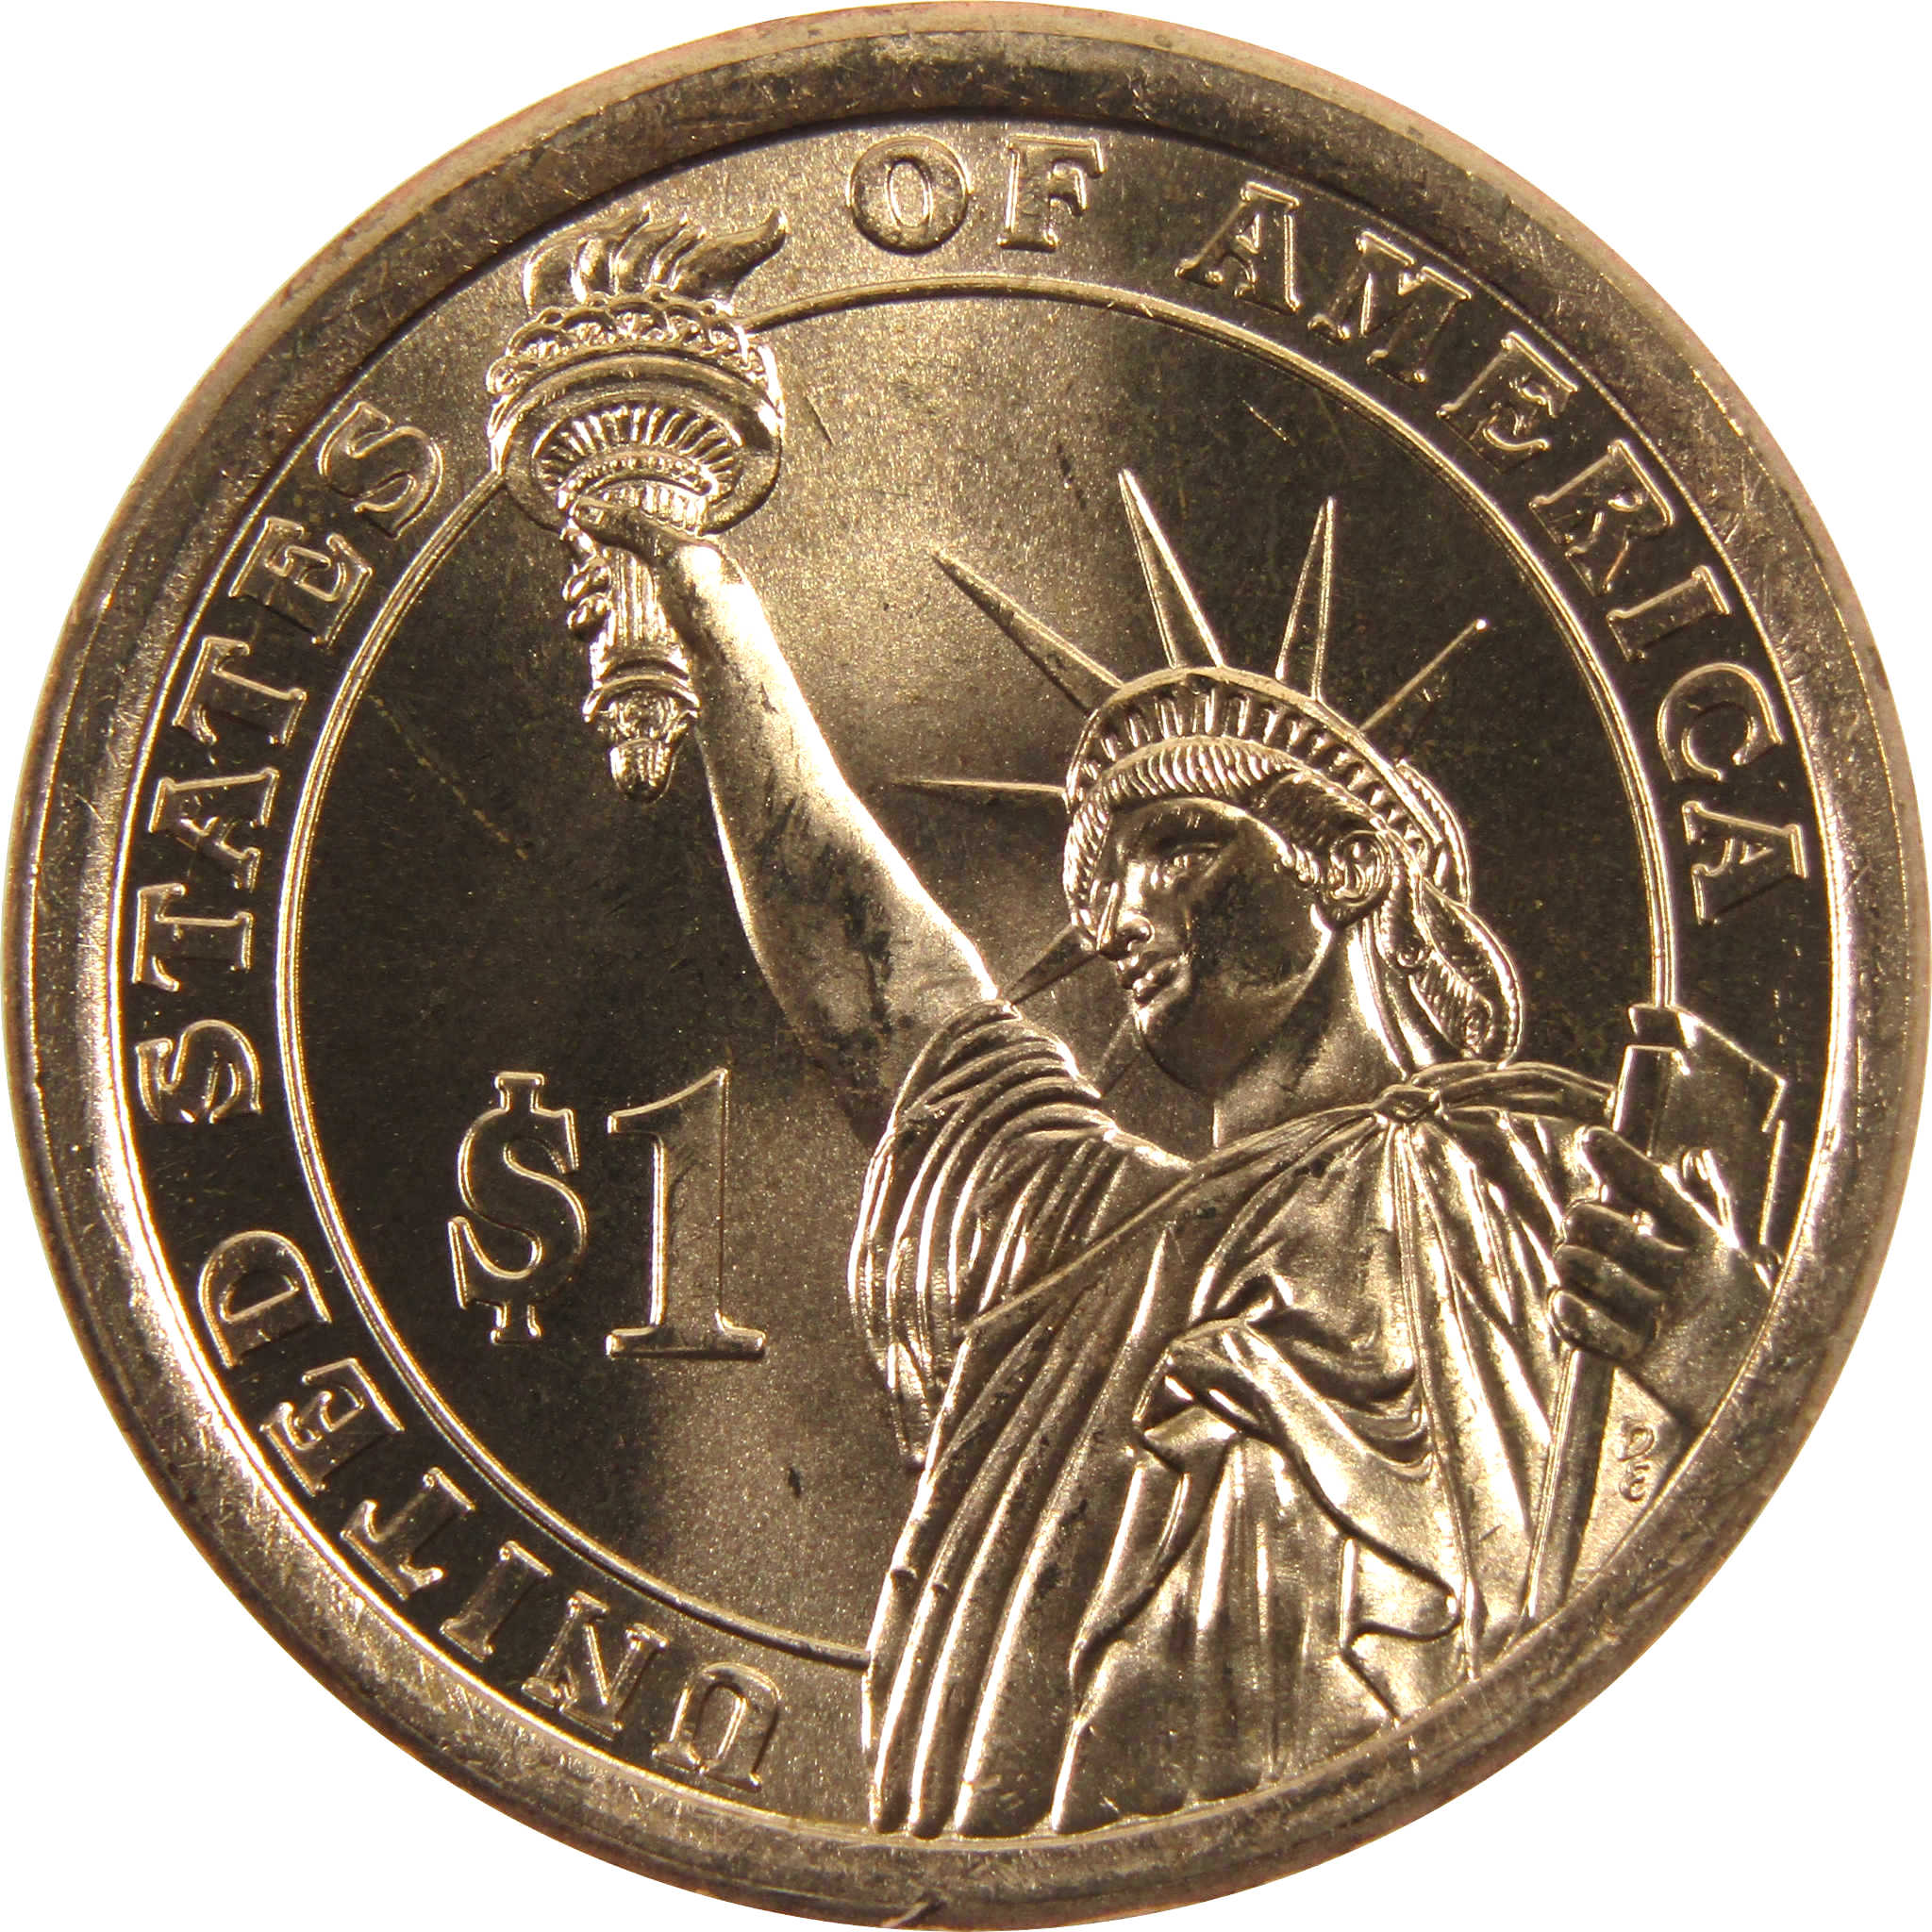 2015 P Dwight D Eisenhower Presidential Dollar BU Uncirculated $1 Coin